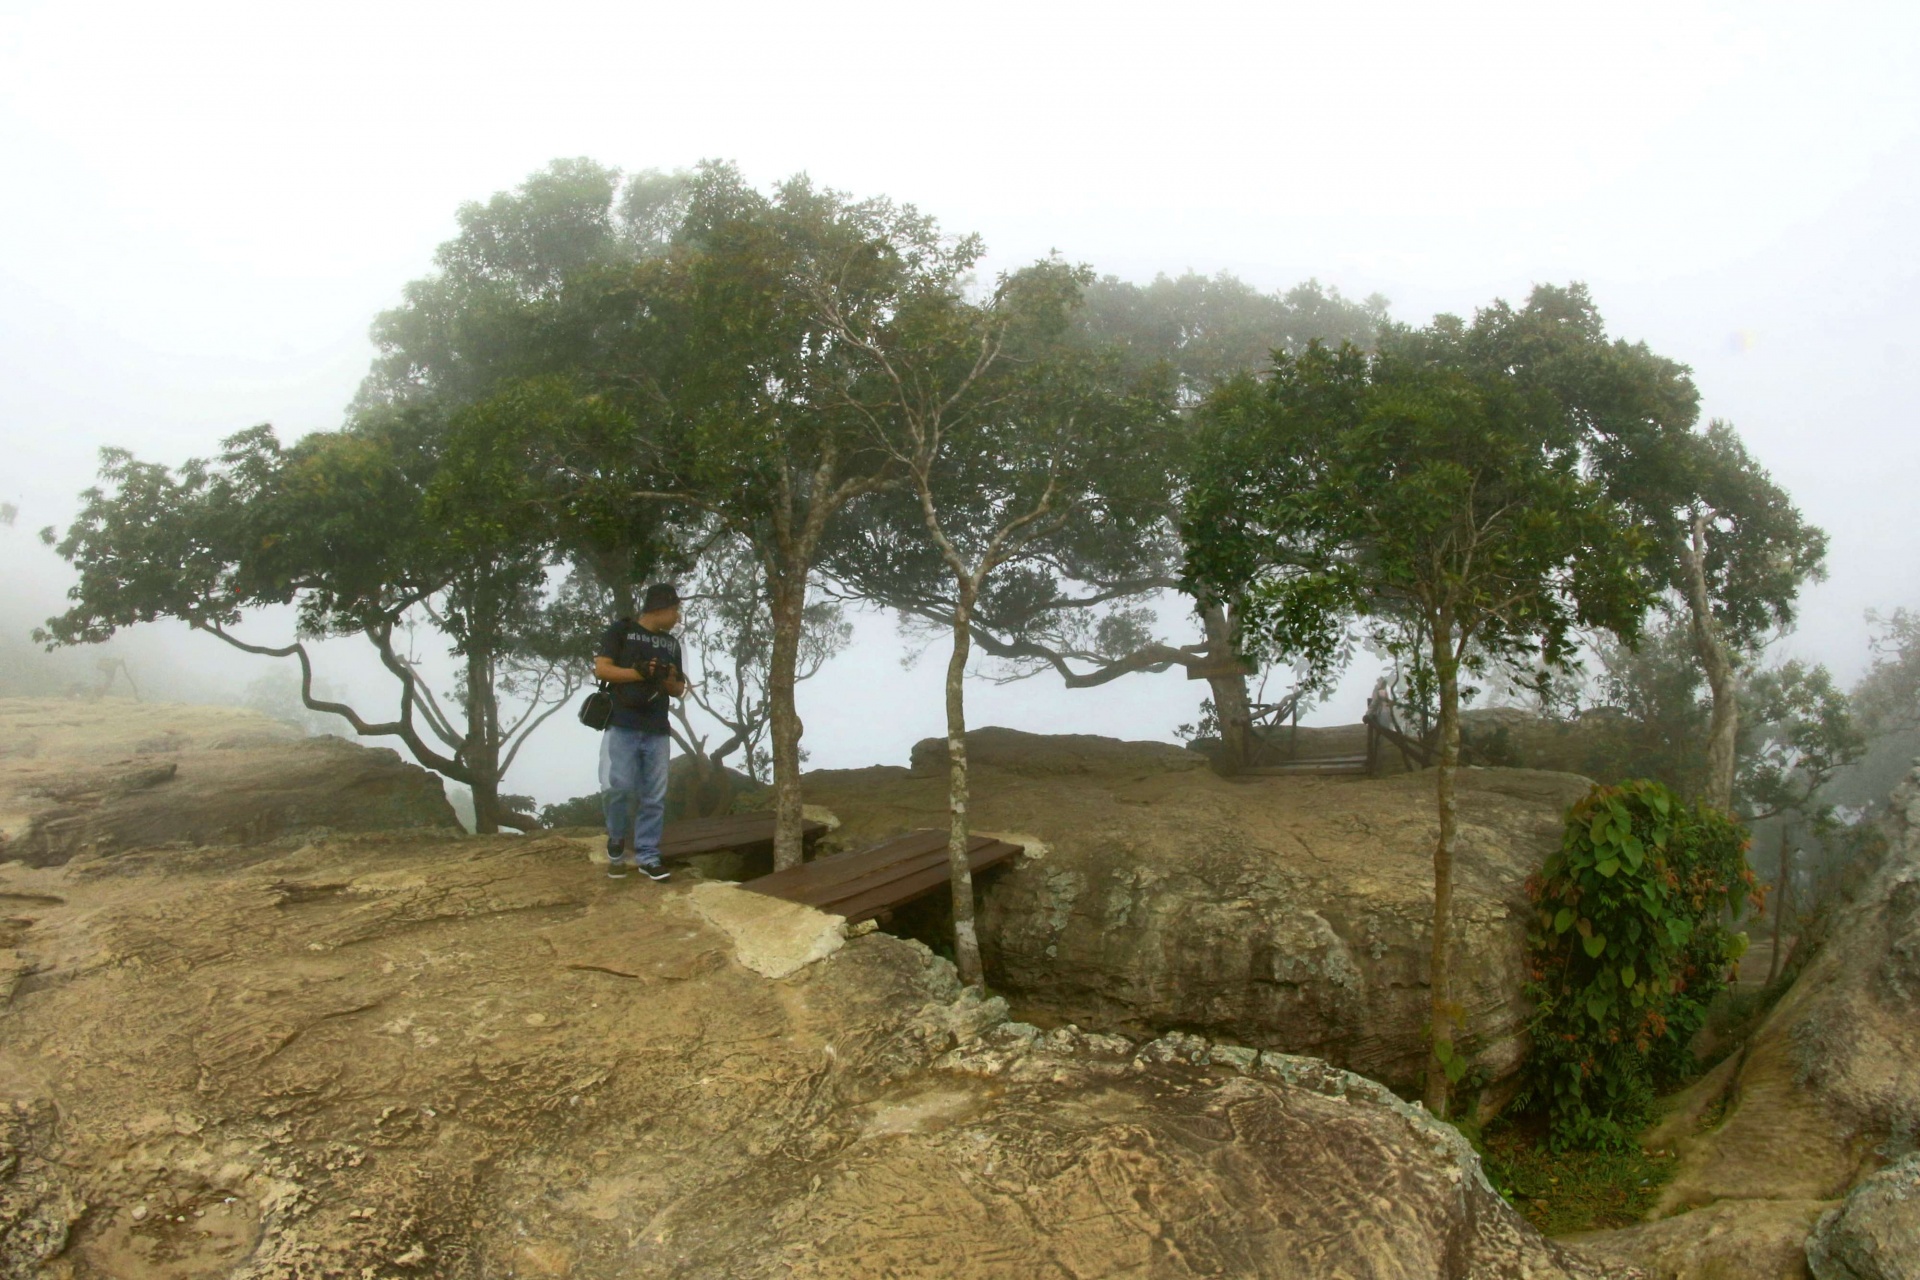 Klif in het Nationaal Park Pa Hin Ngam